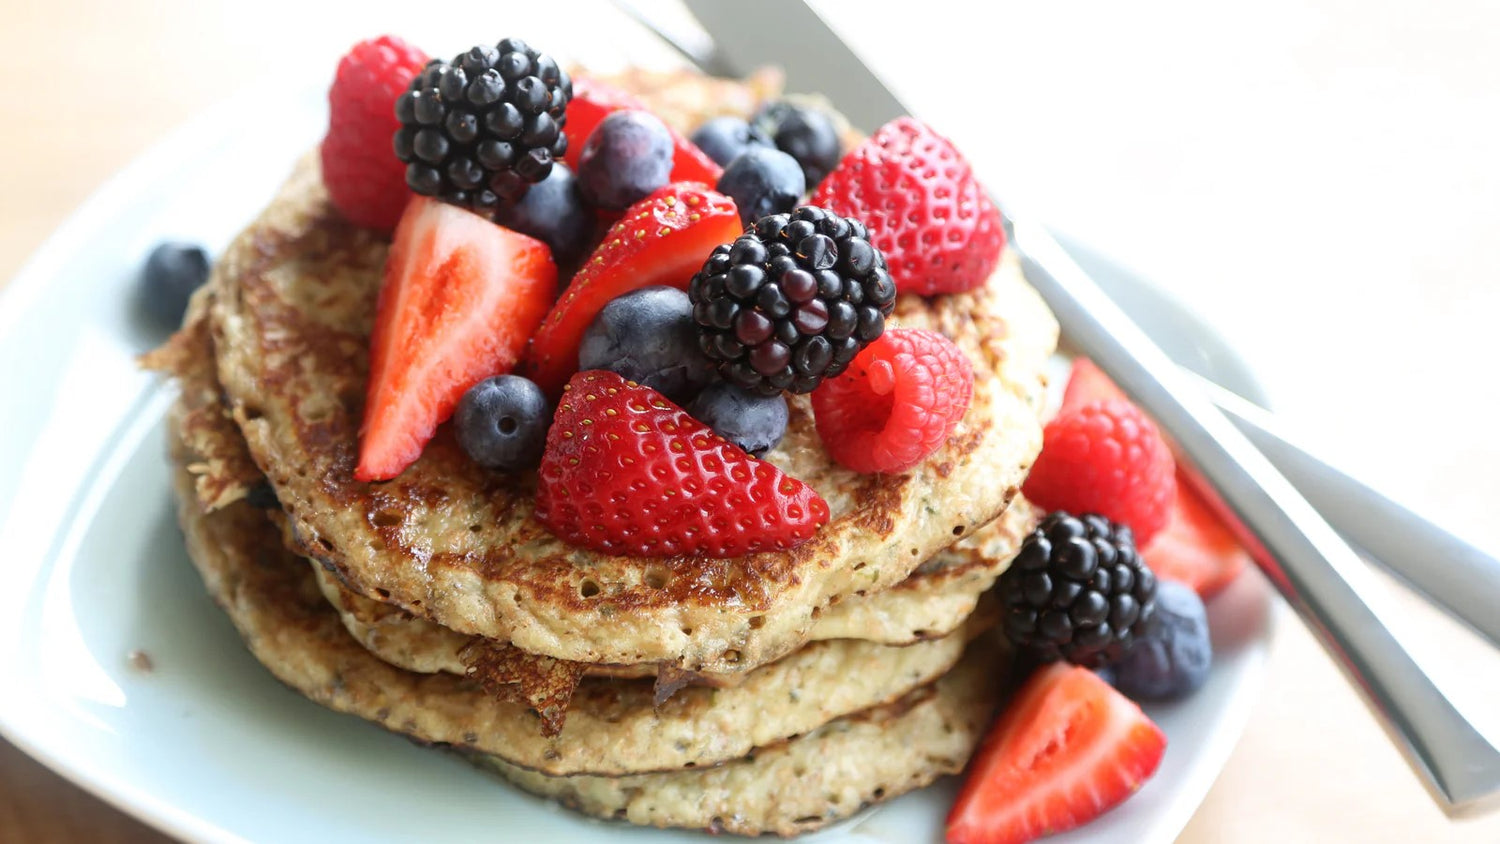 Hemp Seed Oil Manitoba Harvest Recipe Hemp Pancakes Topped With Fresh Berries